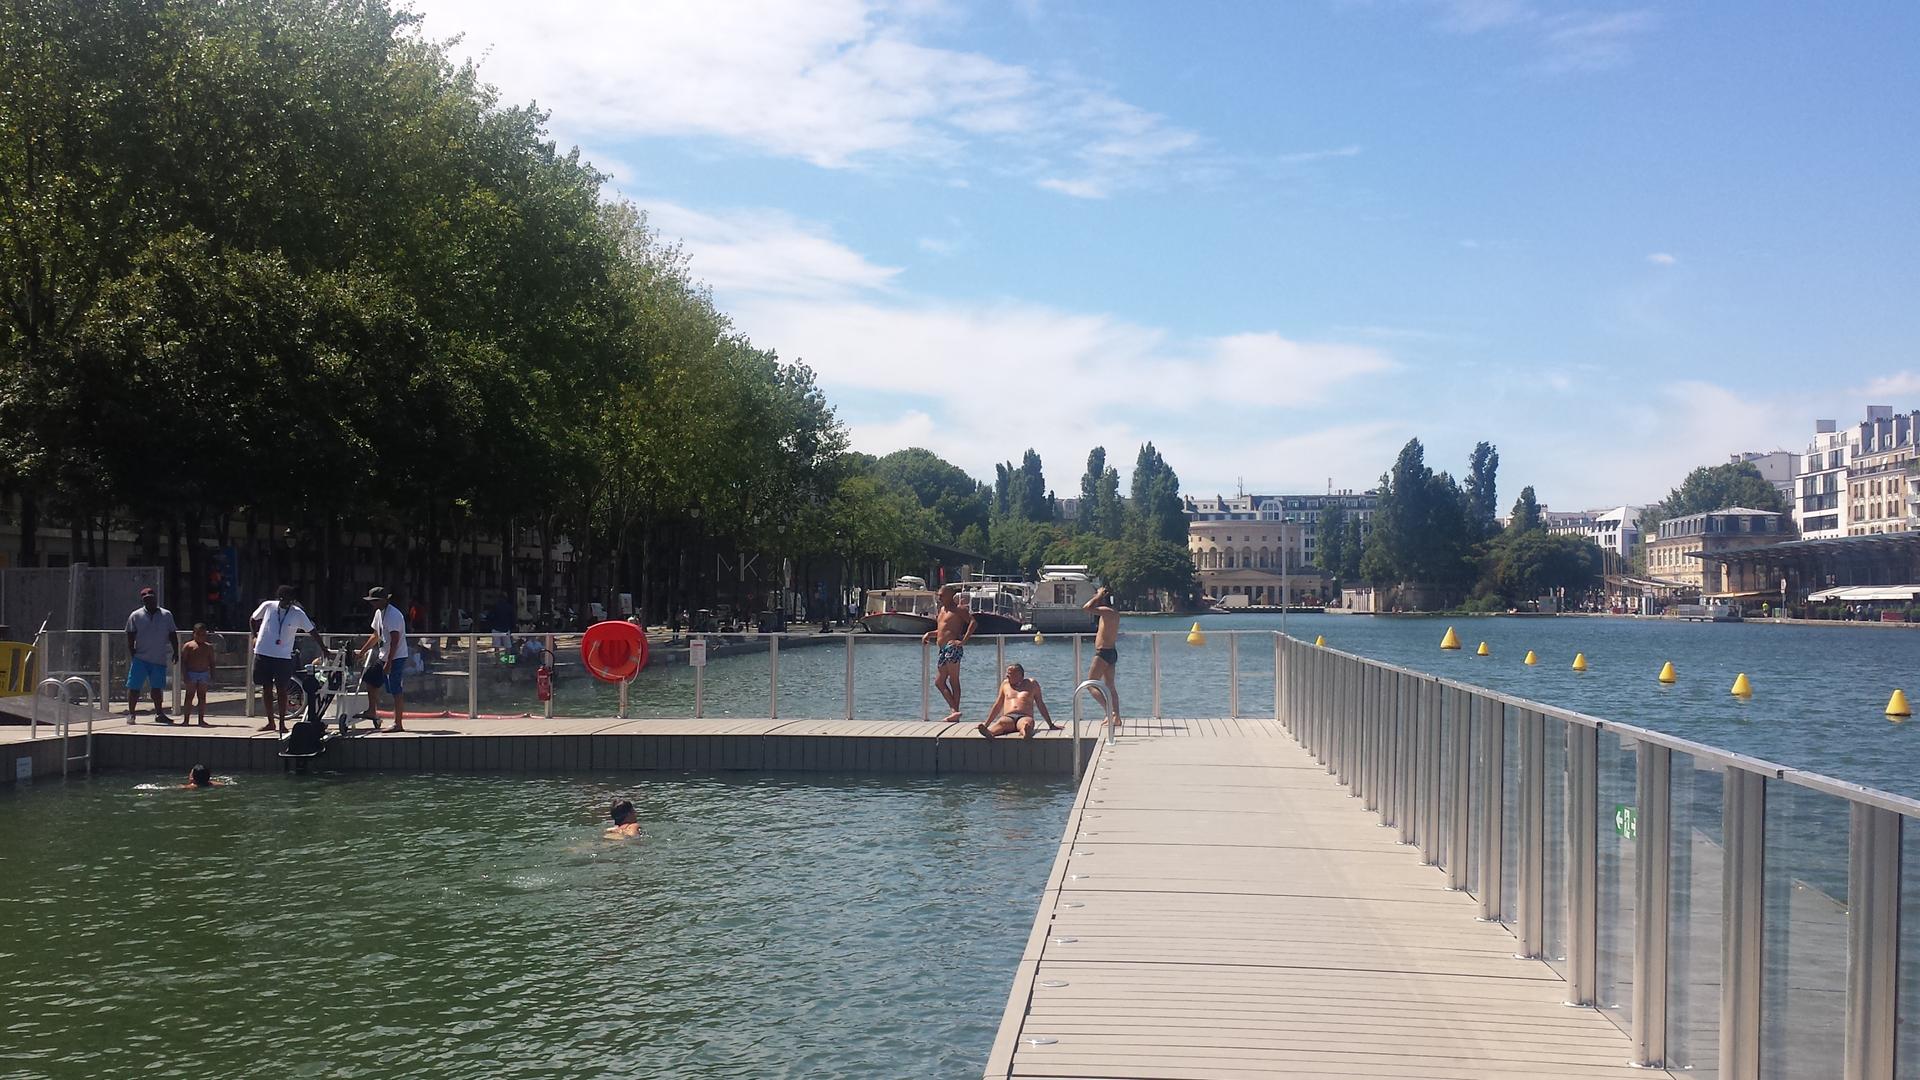 One of the canal pools in the Bassin de la Villette in Paris